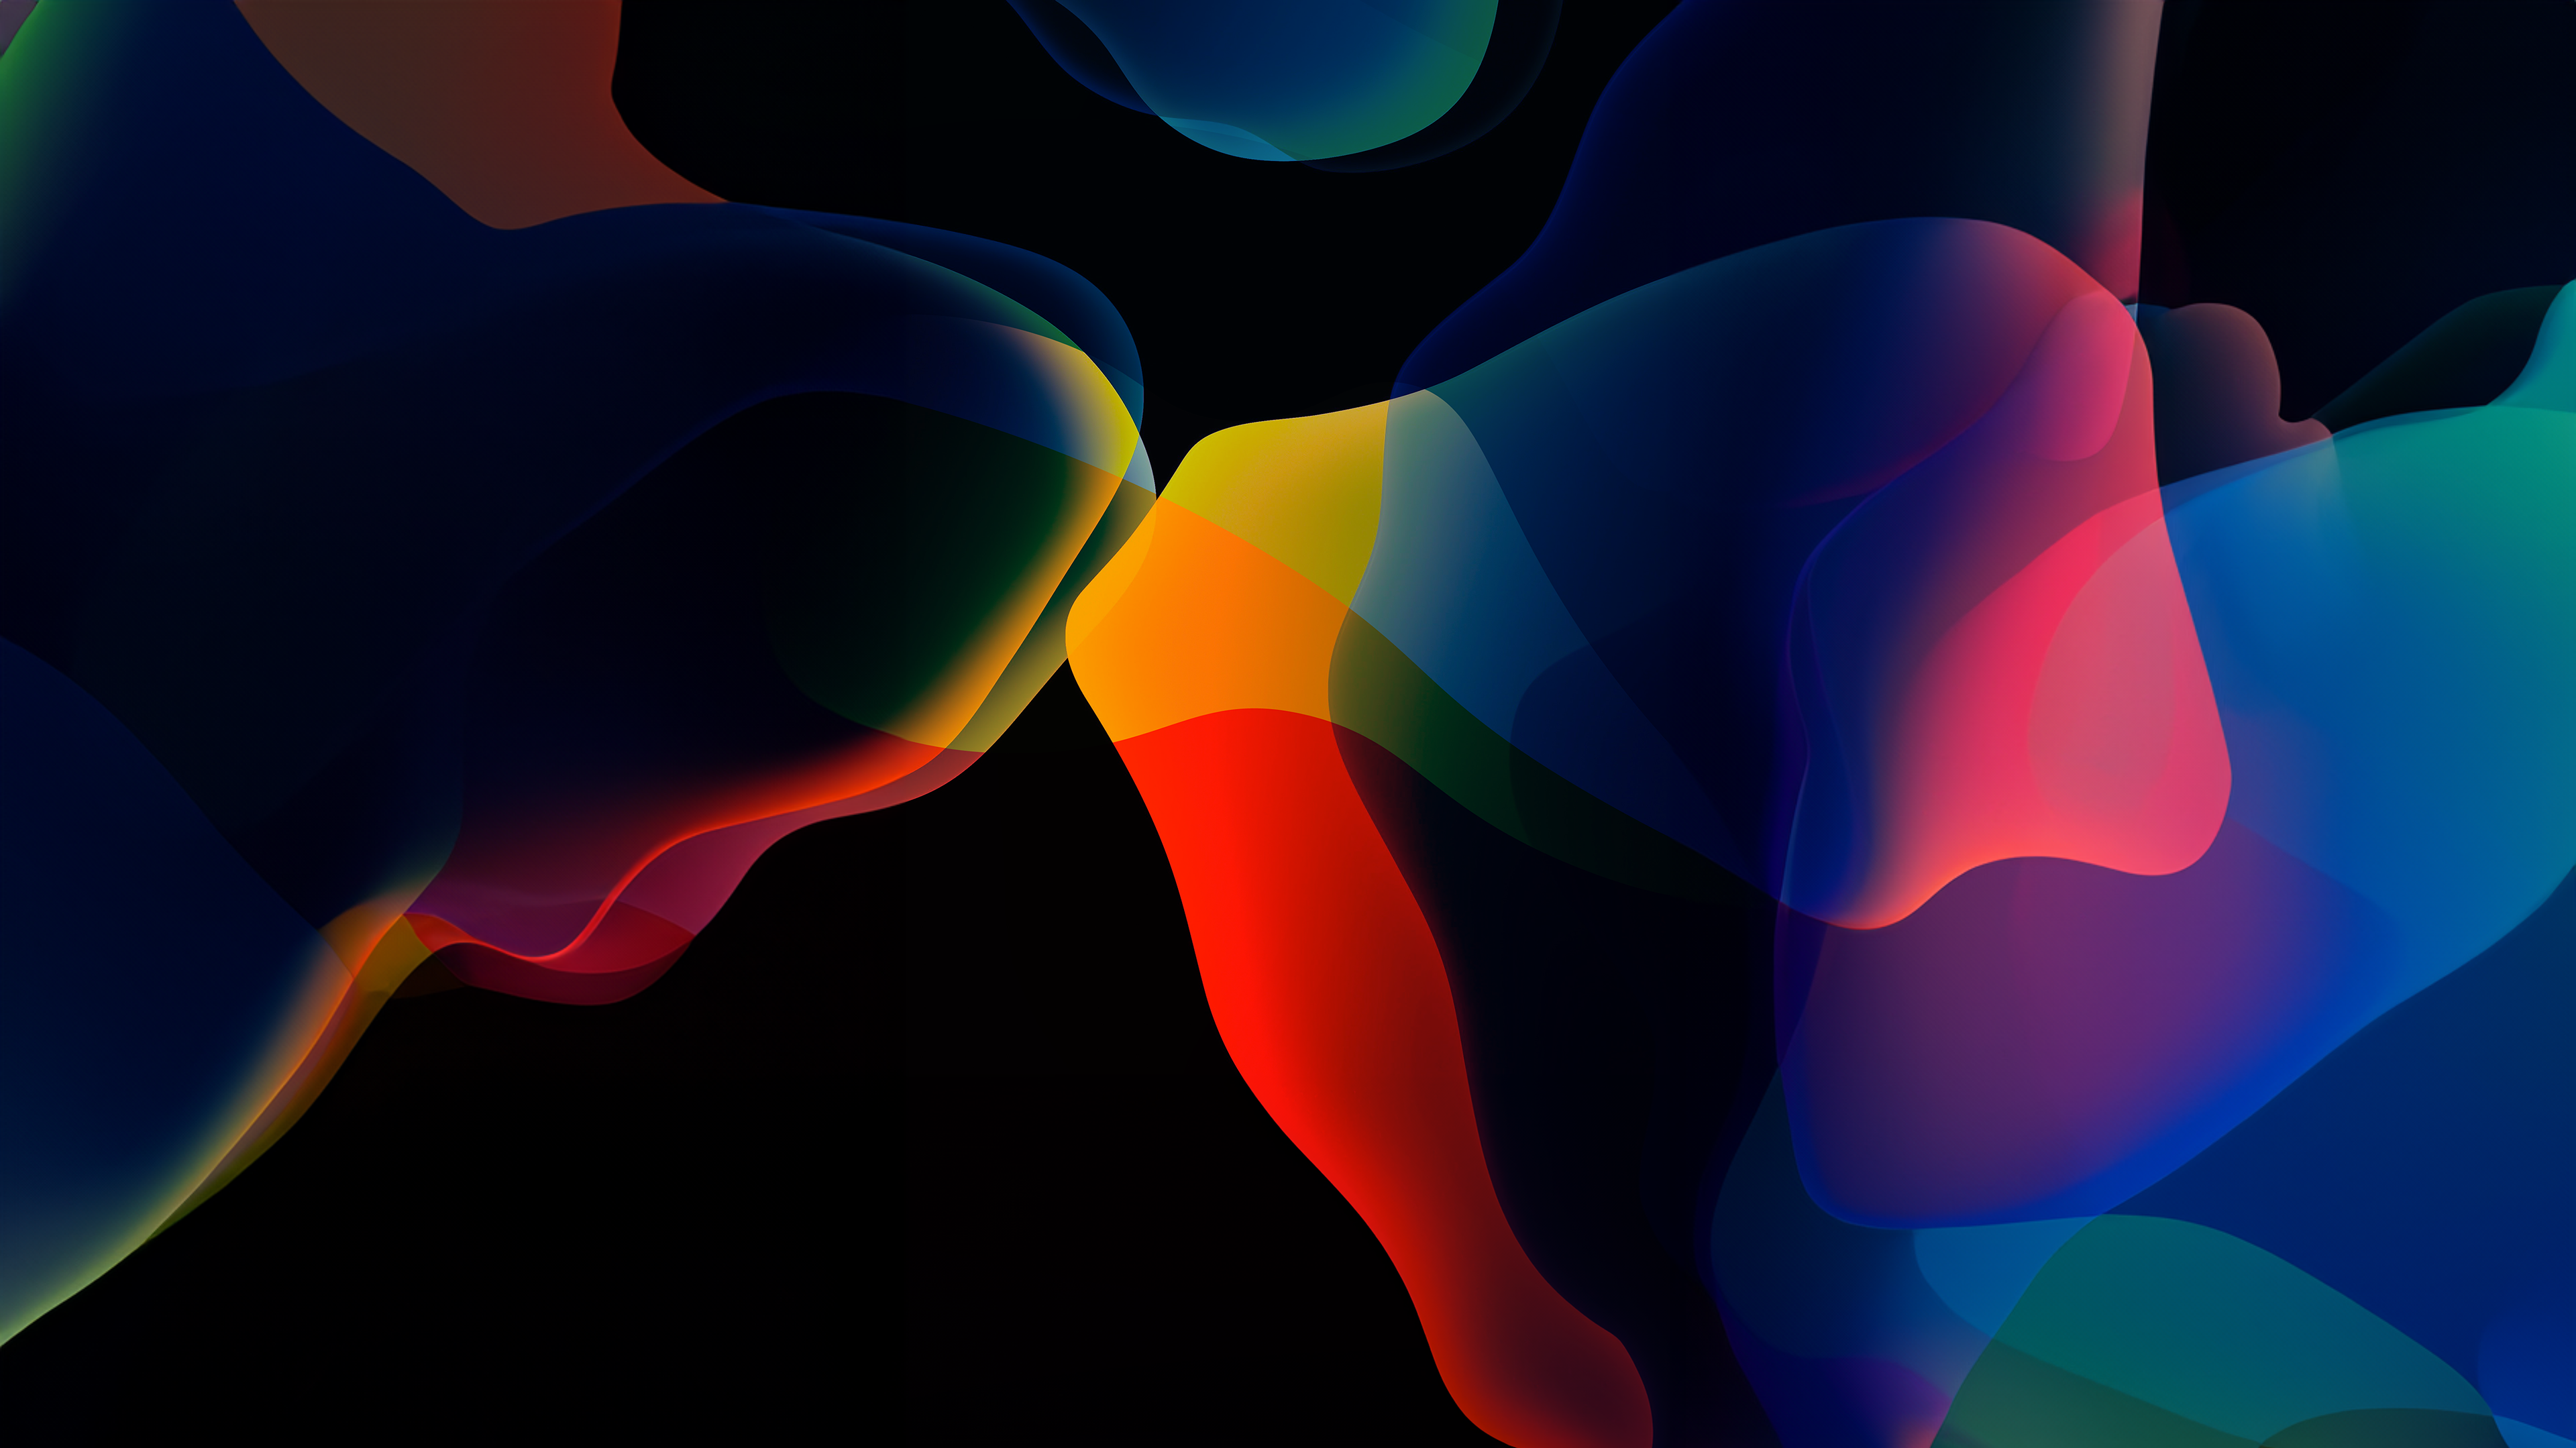 Desktop Wallpaper 4k Colorful Abstract And Dark Design